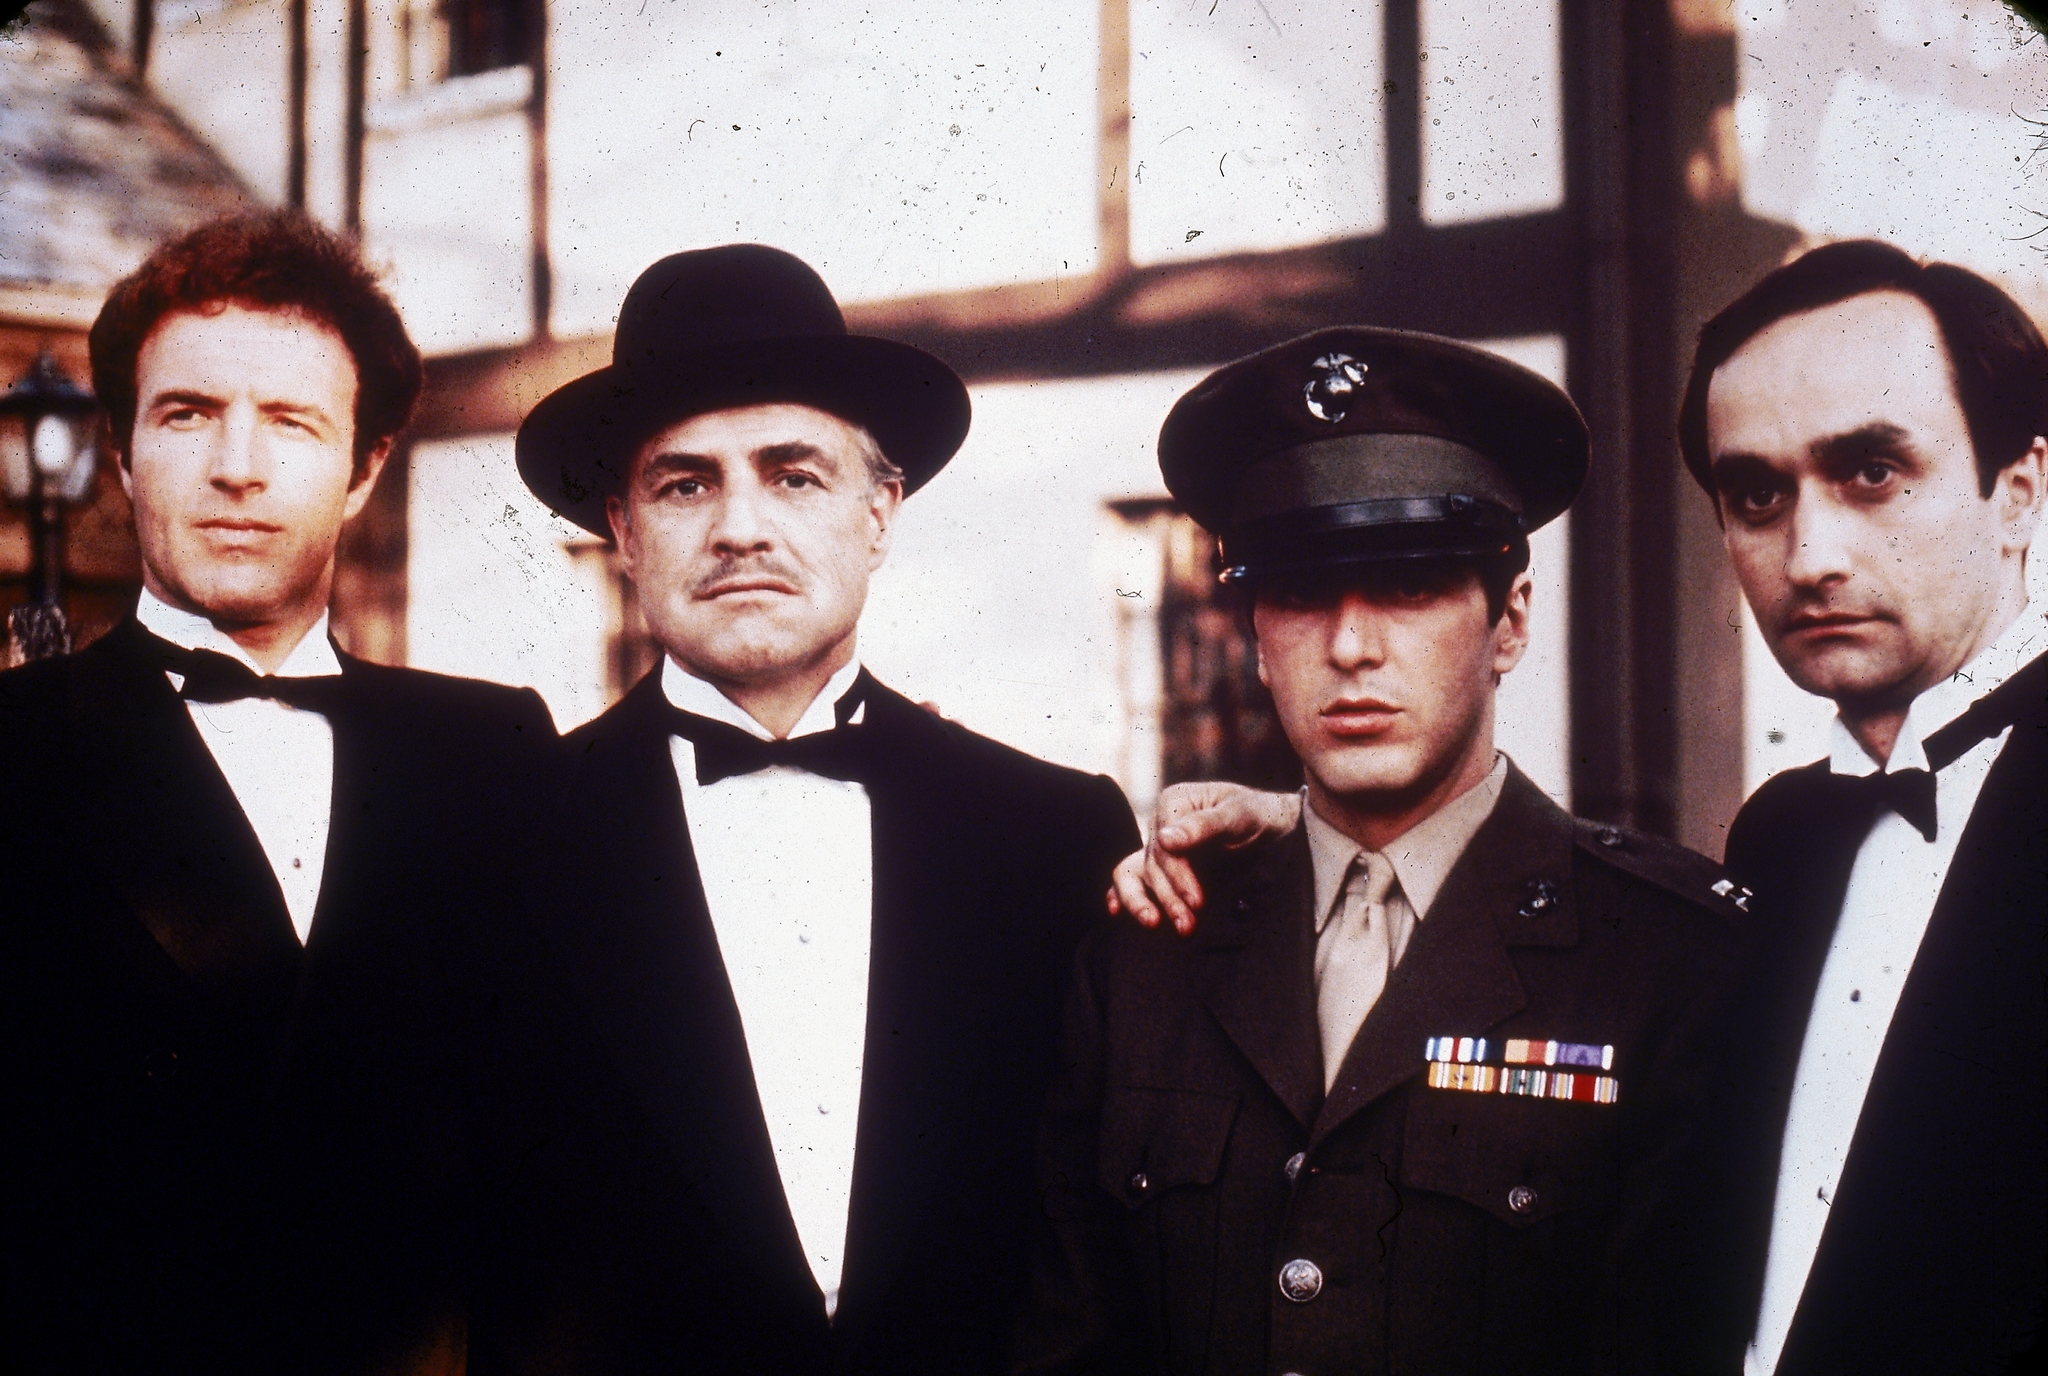 Marlon Brando, Al Pacino, James Caan, and John Cazale in The Godfather (1972)